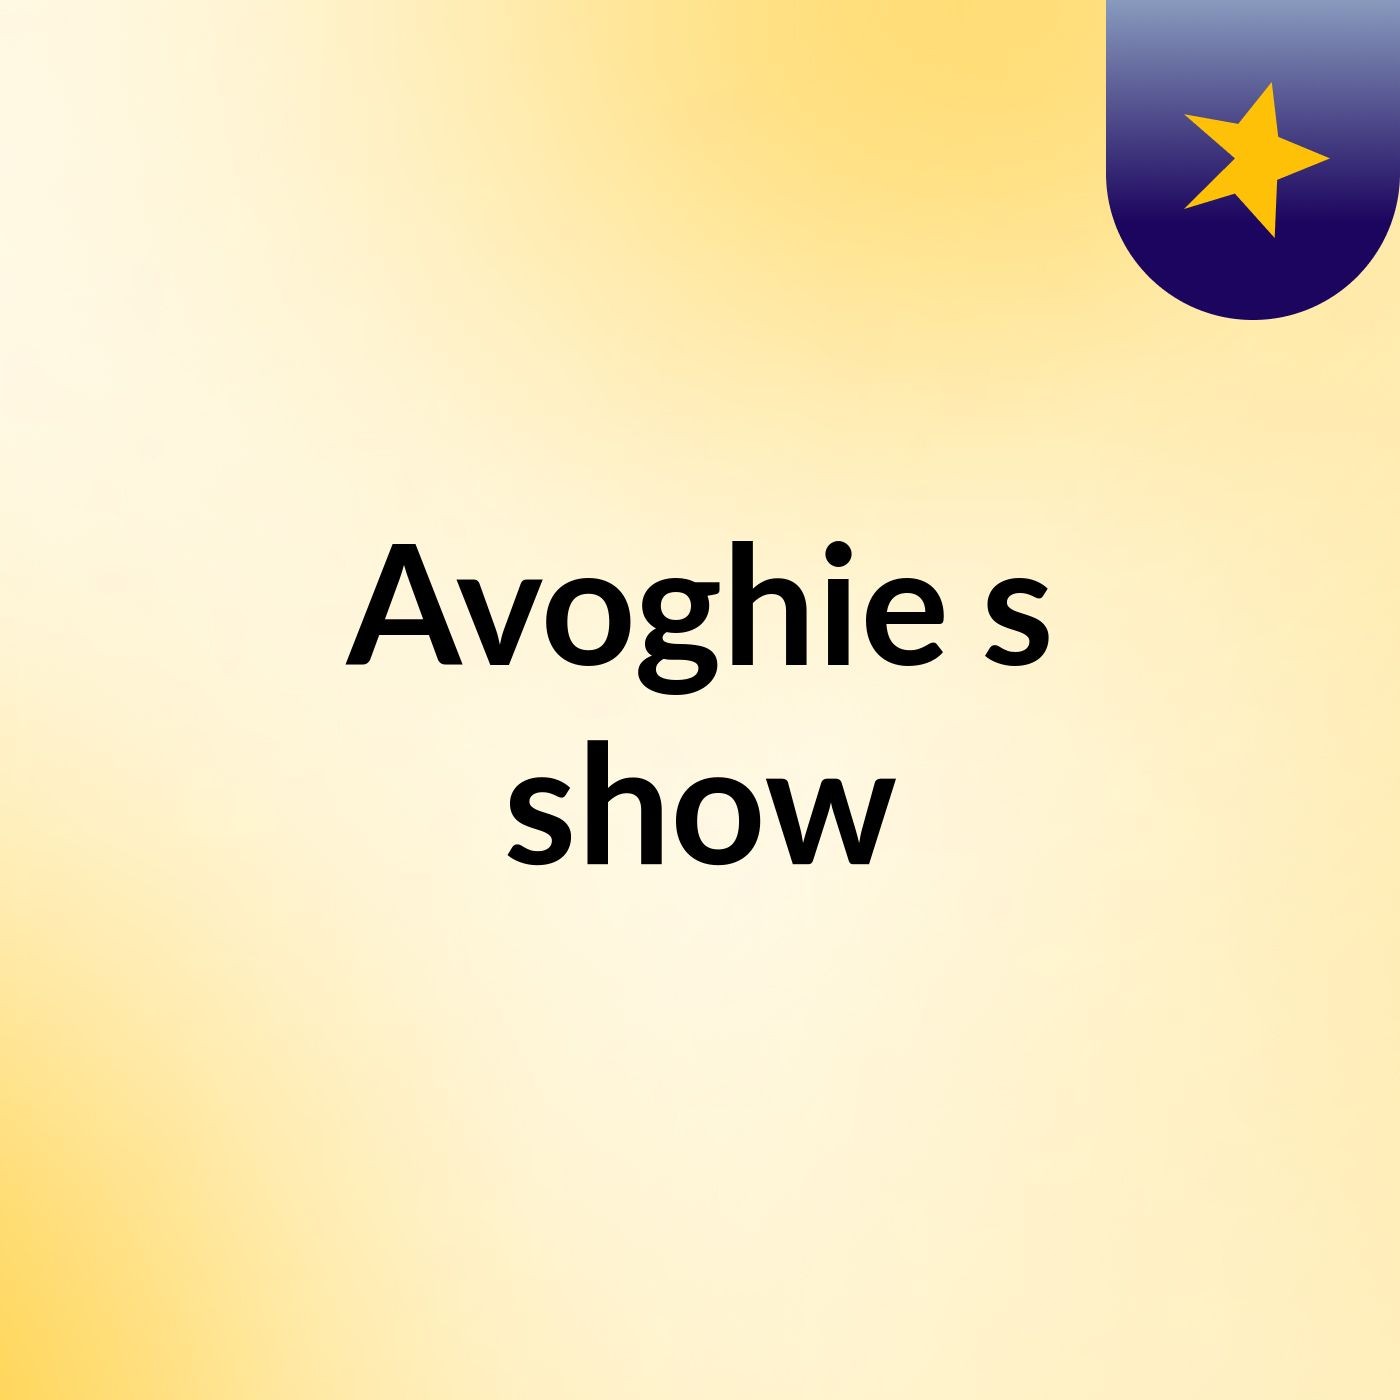 Avoghie's show